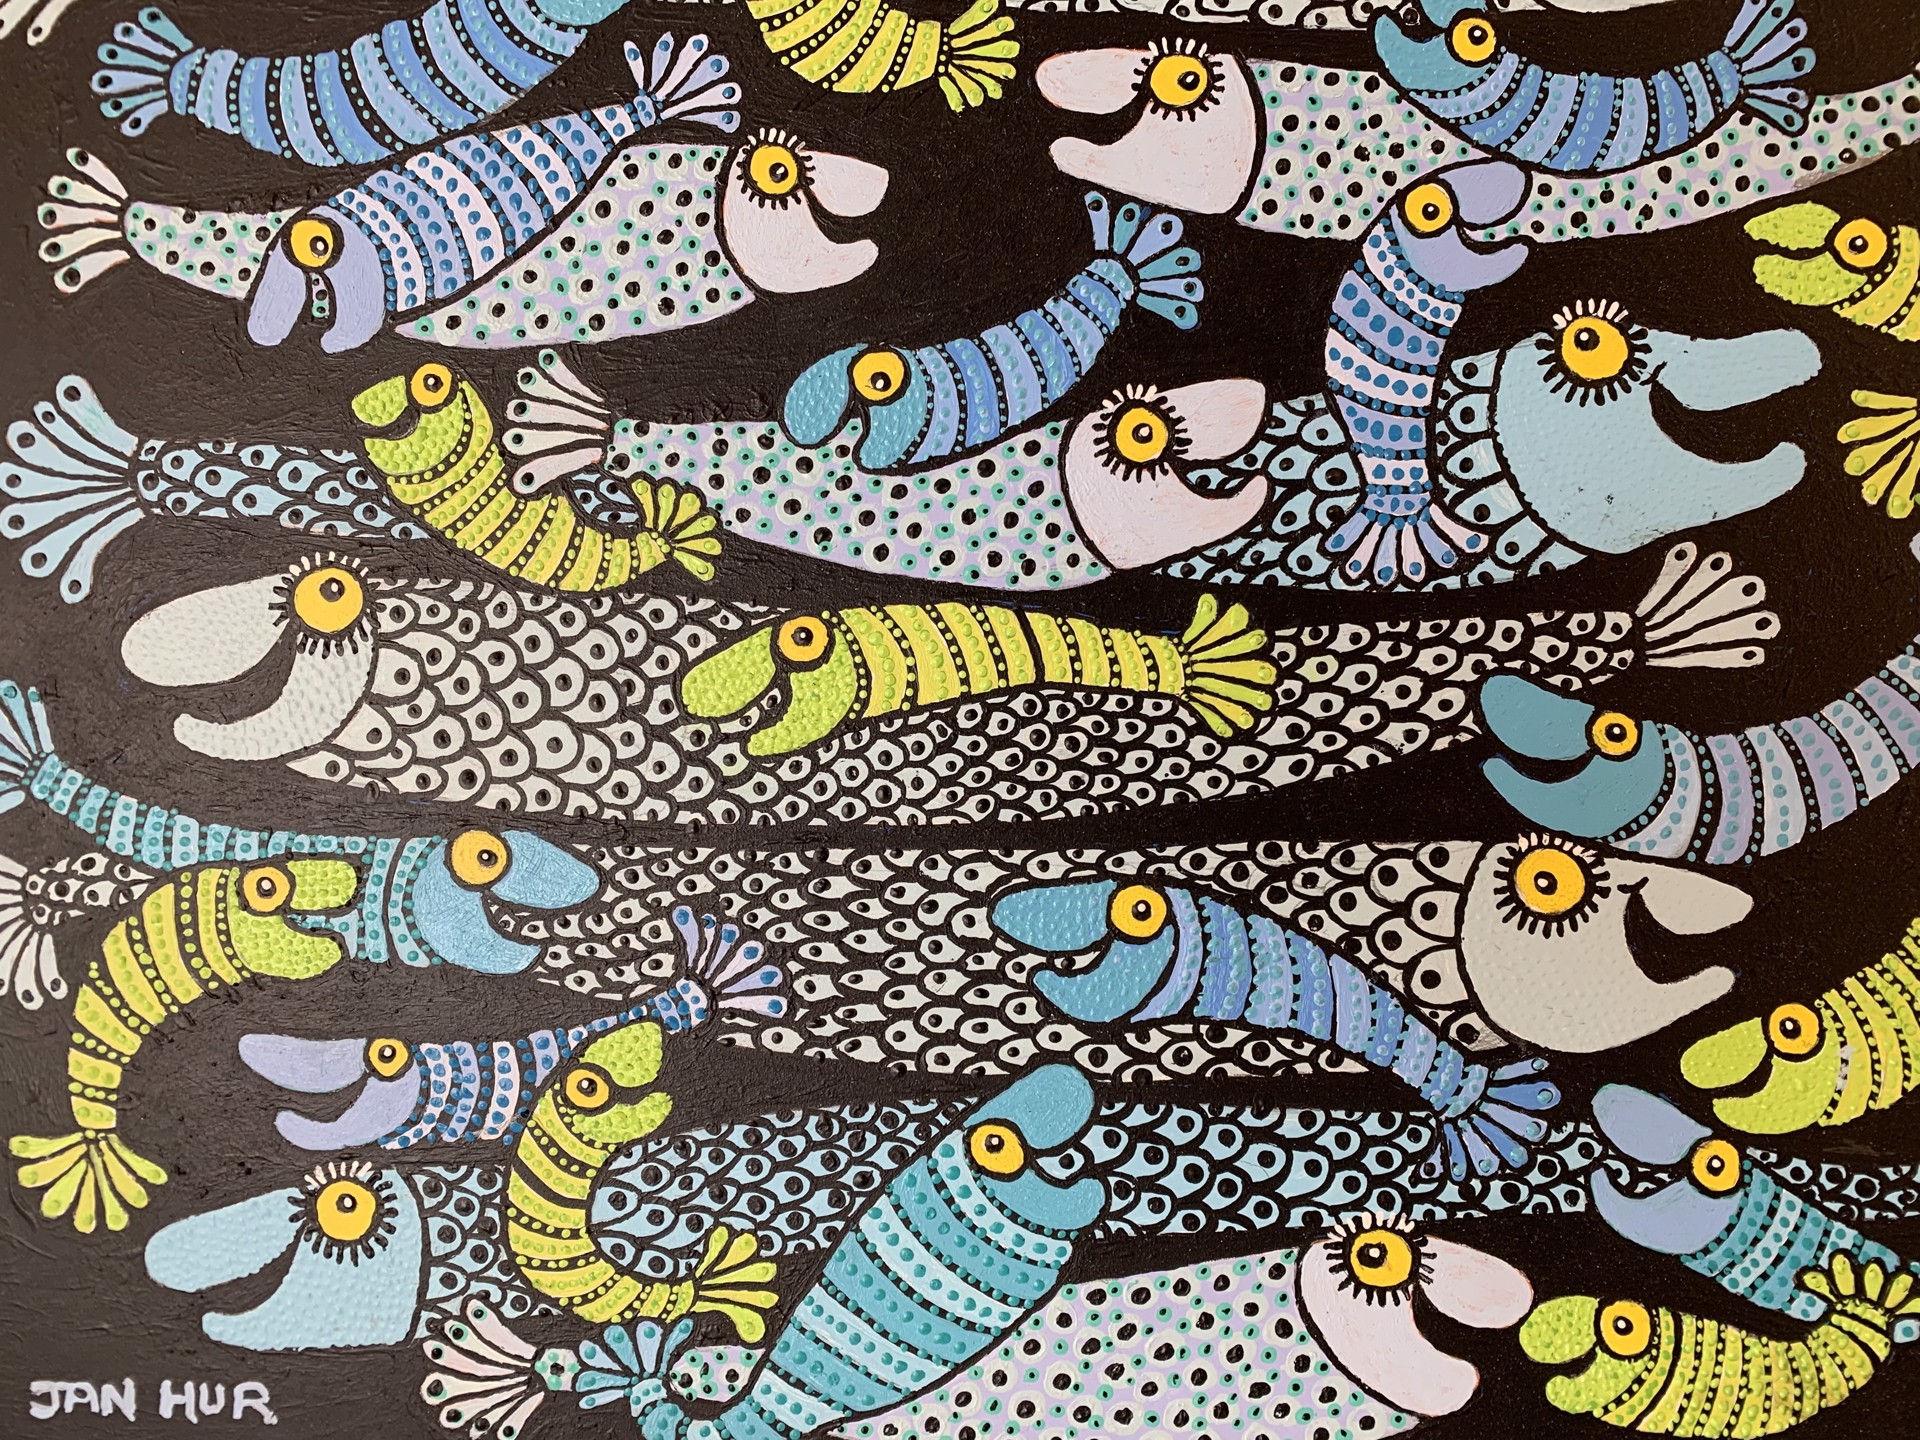 School of Fish by Jan Hur